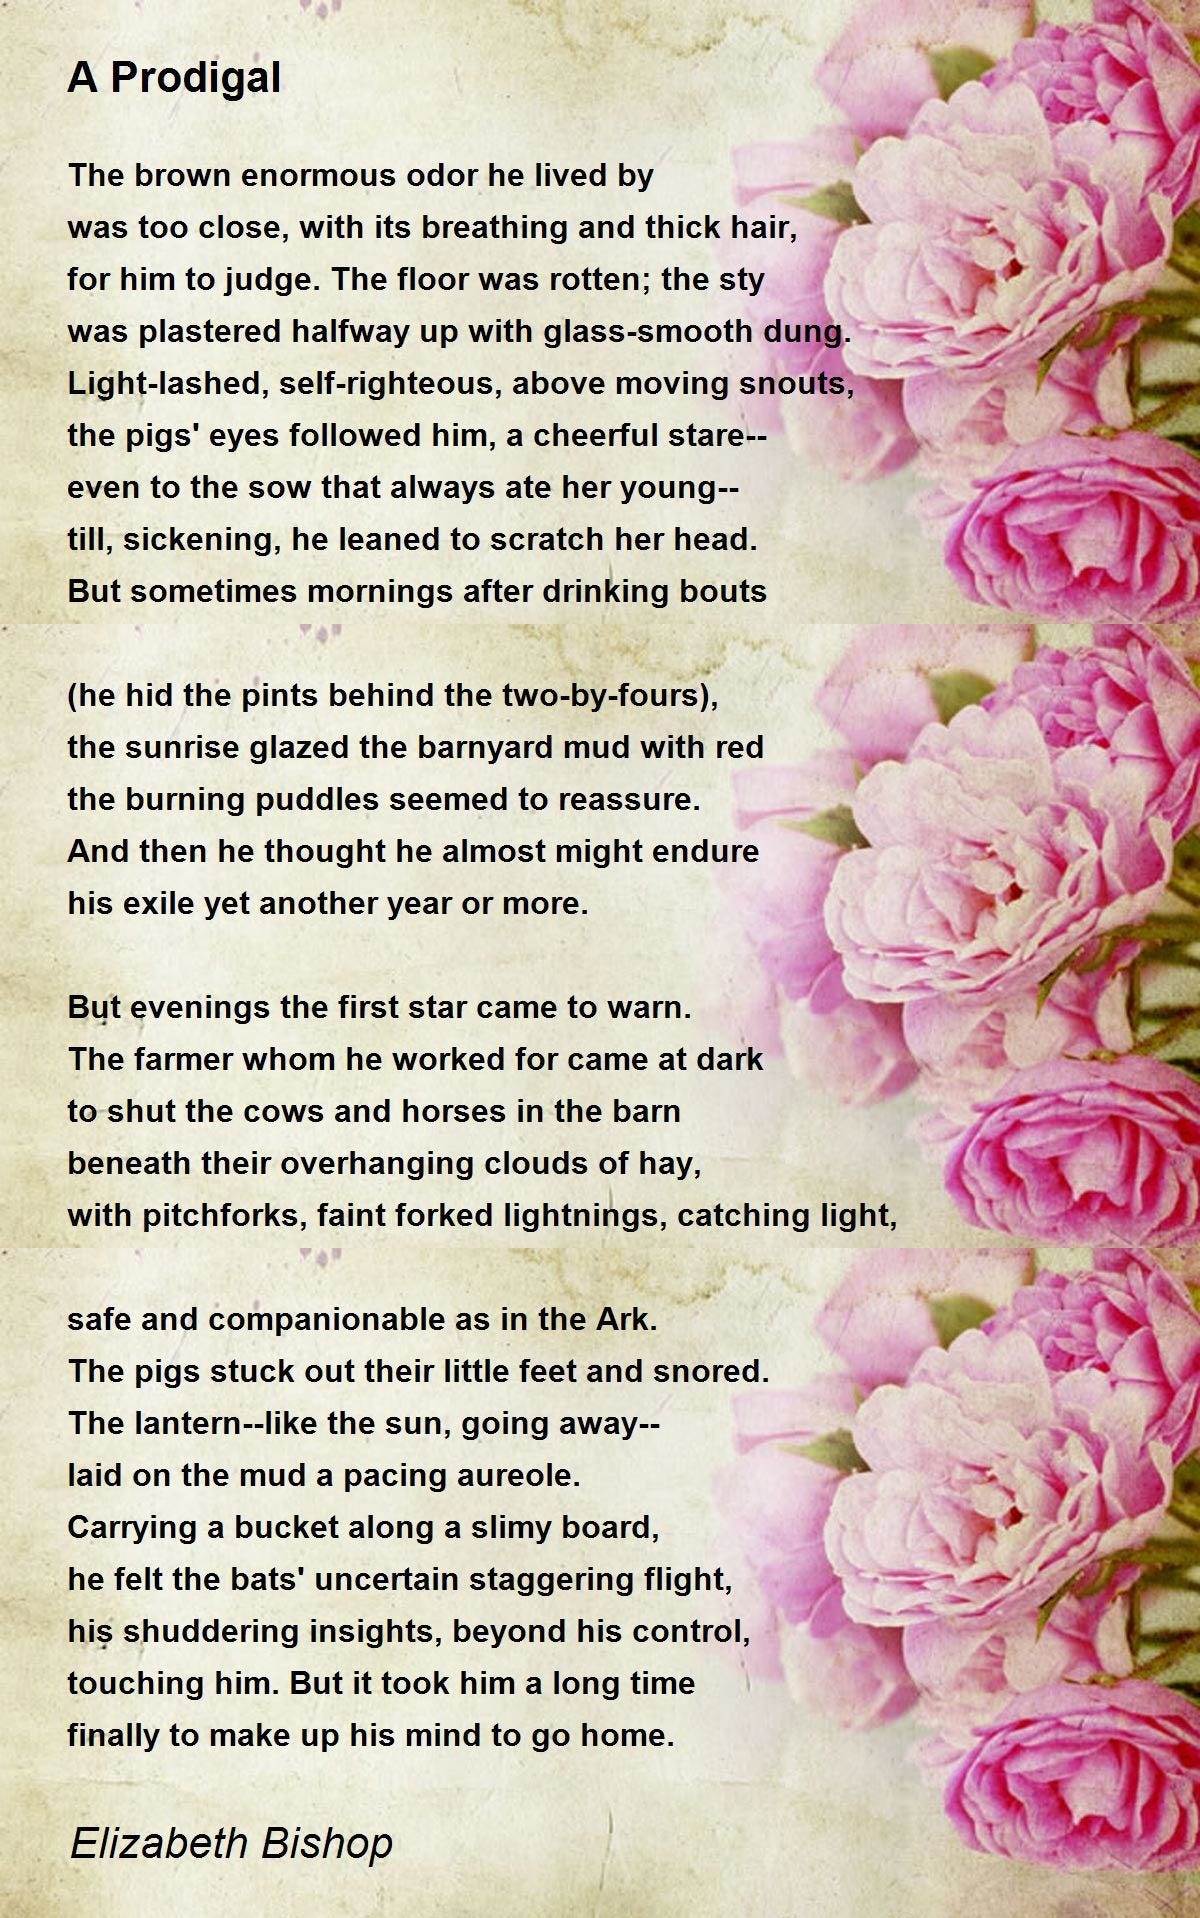 A Prodigal - A Prodigal Poem by Elizabeth Bishop